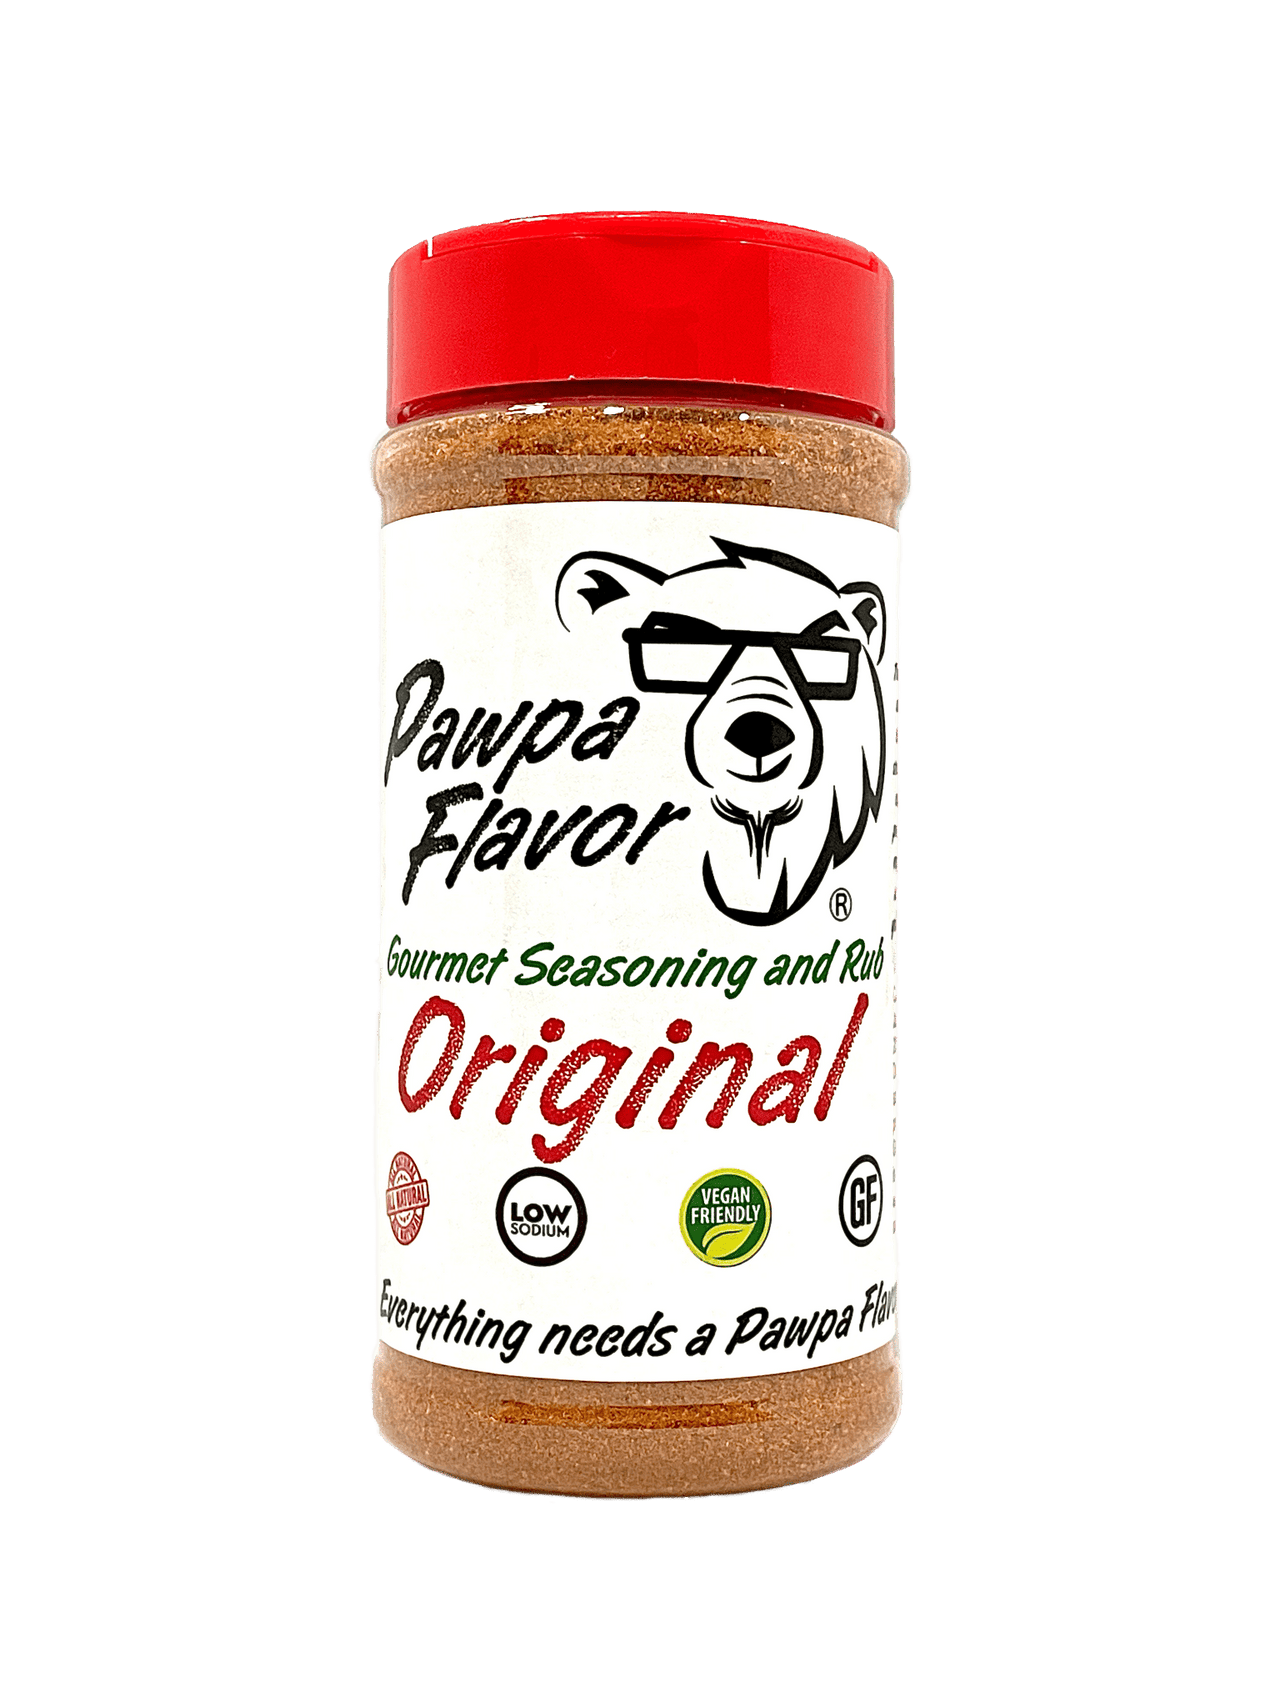 Pawpa Flavor Seasonings and Rubs Large 10oz Original